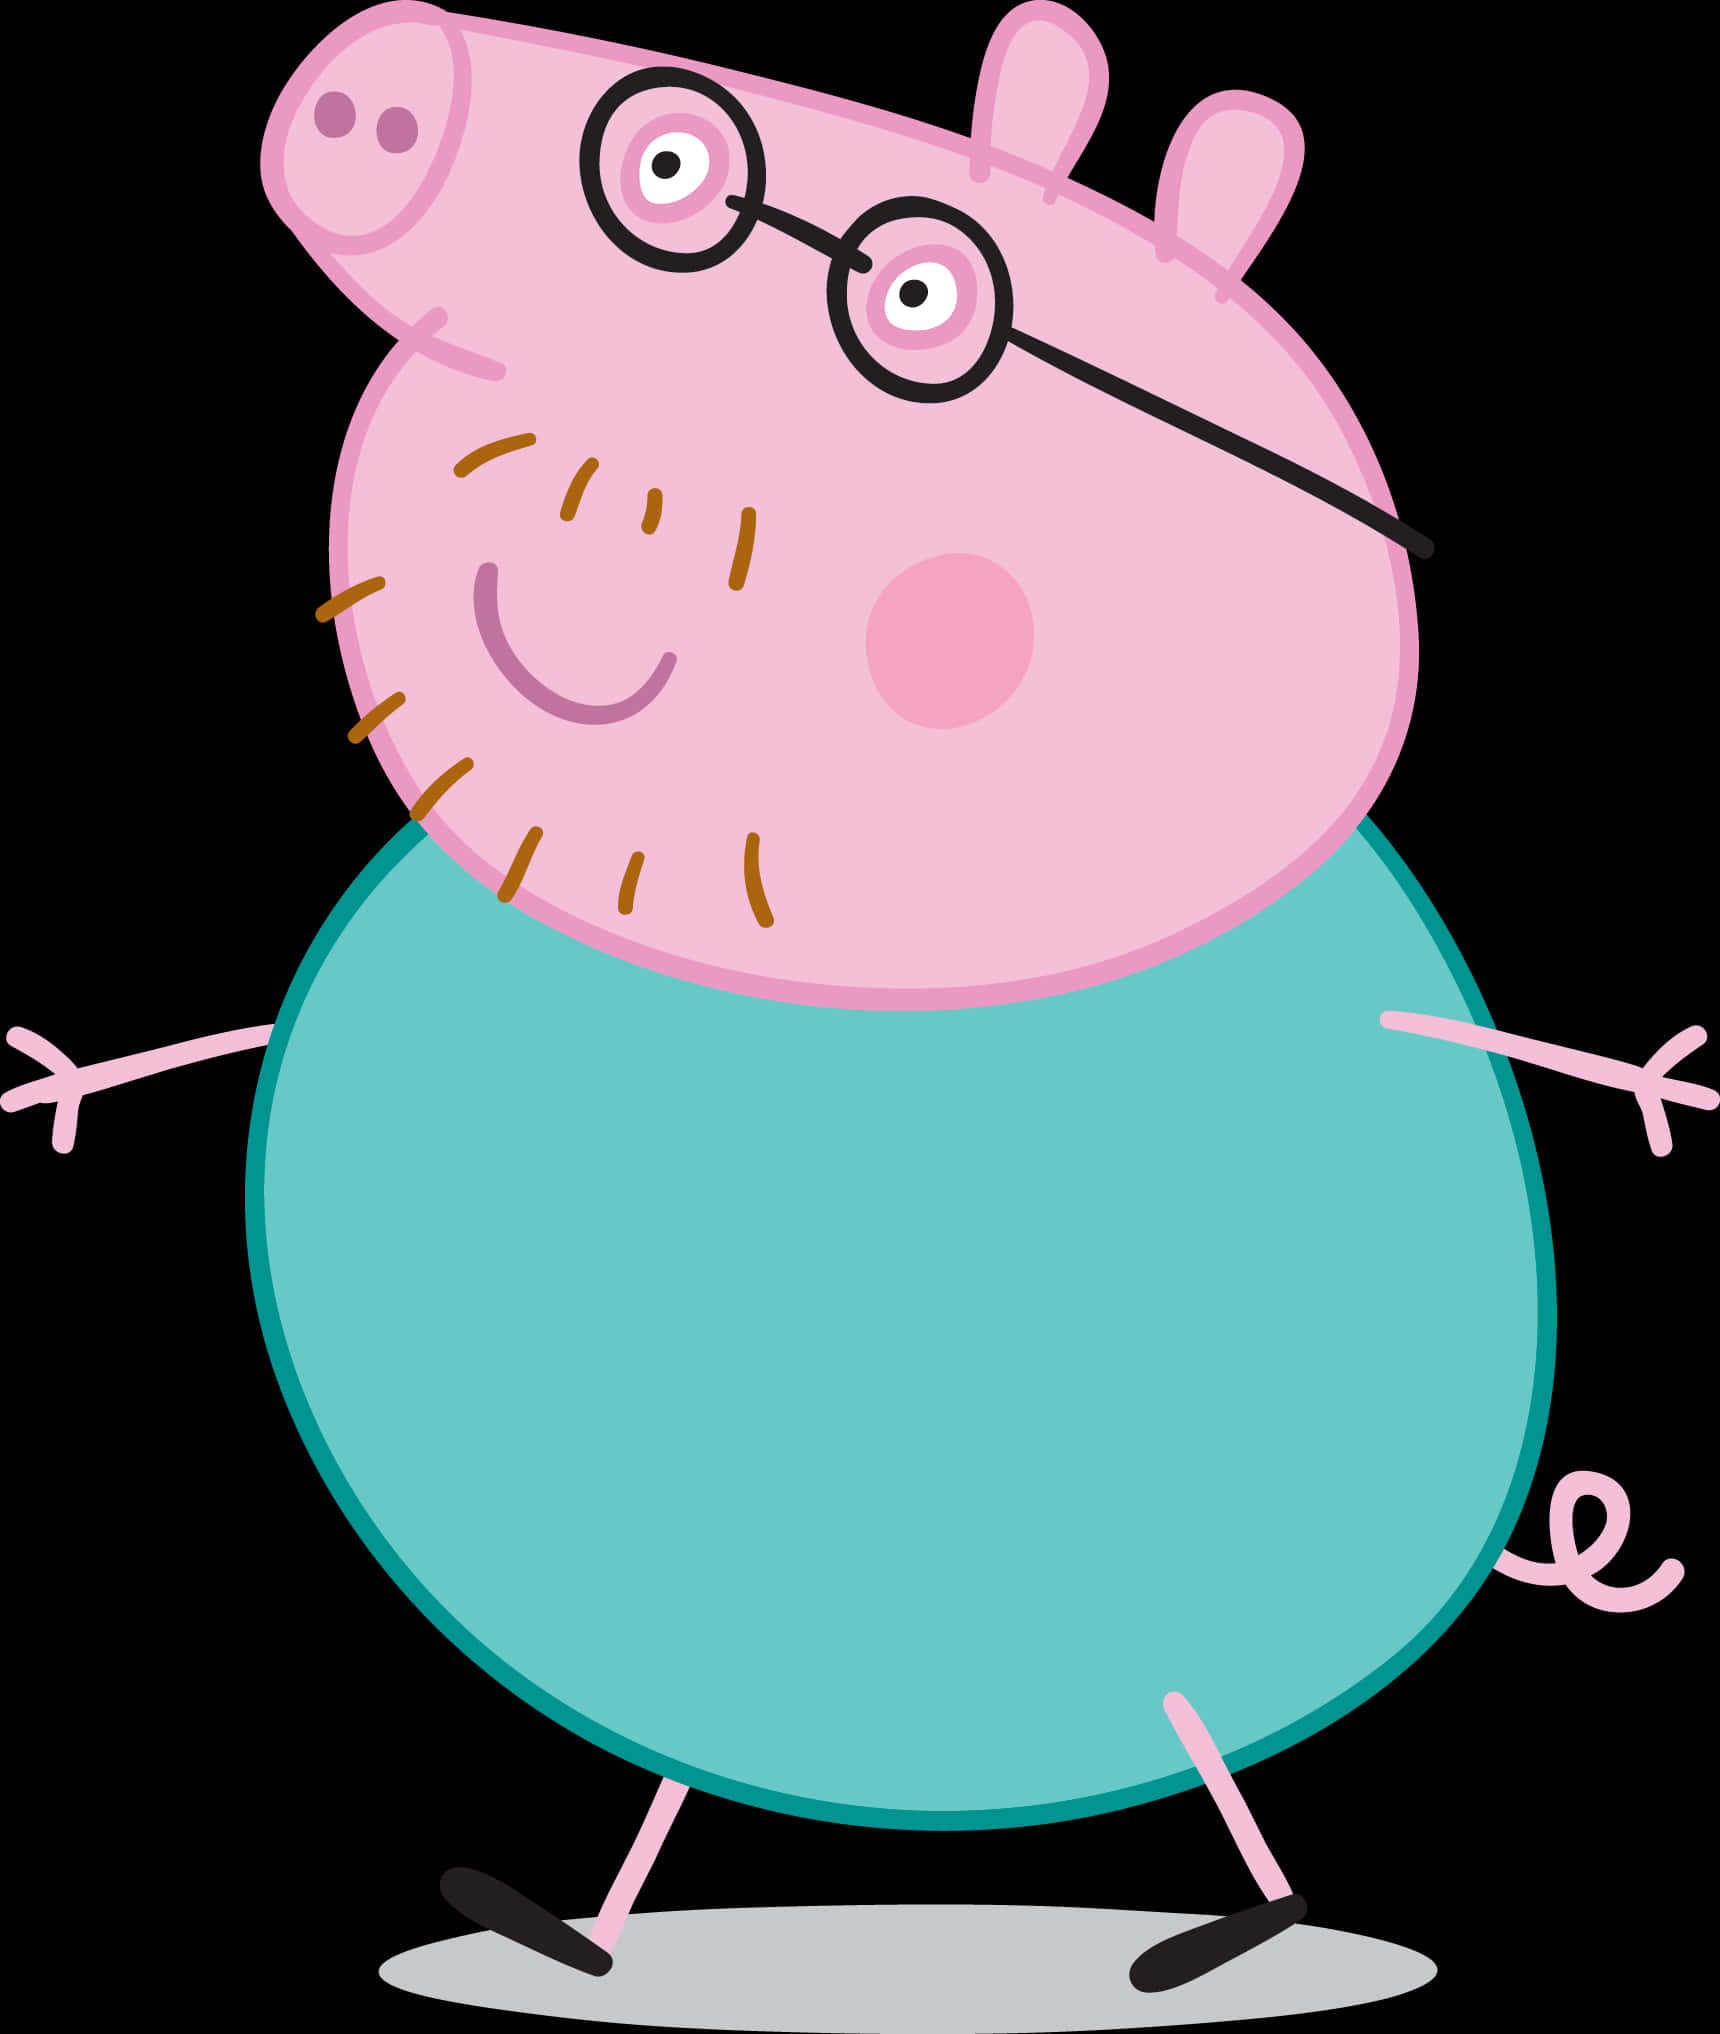 A Cartoon Pig Wearing Glasses